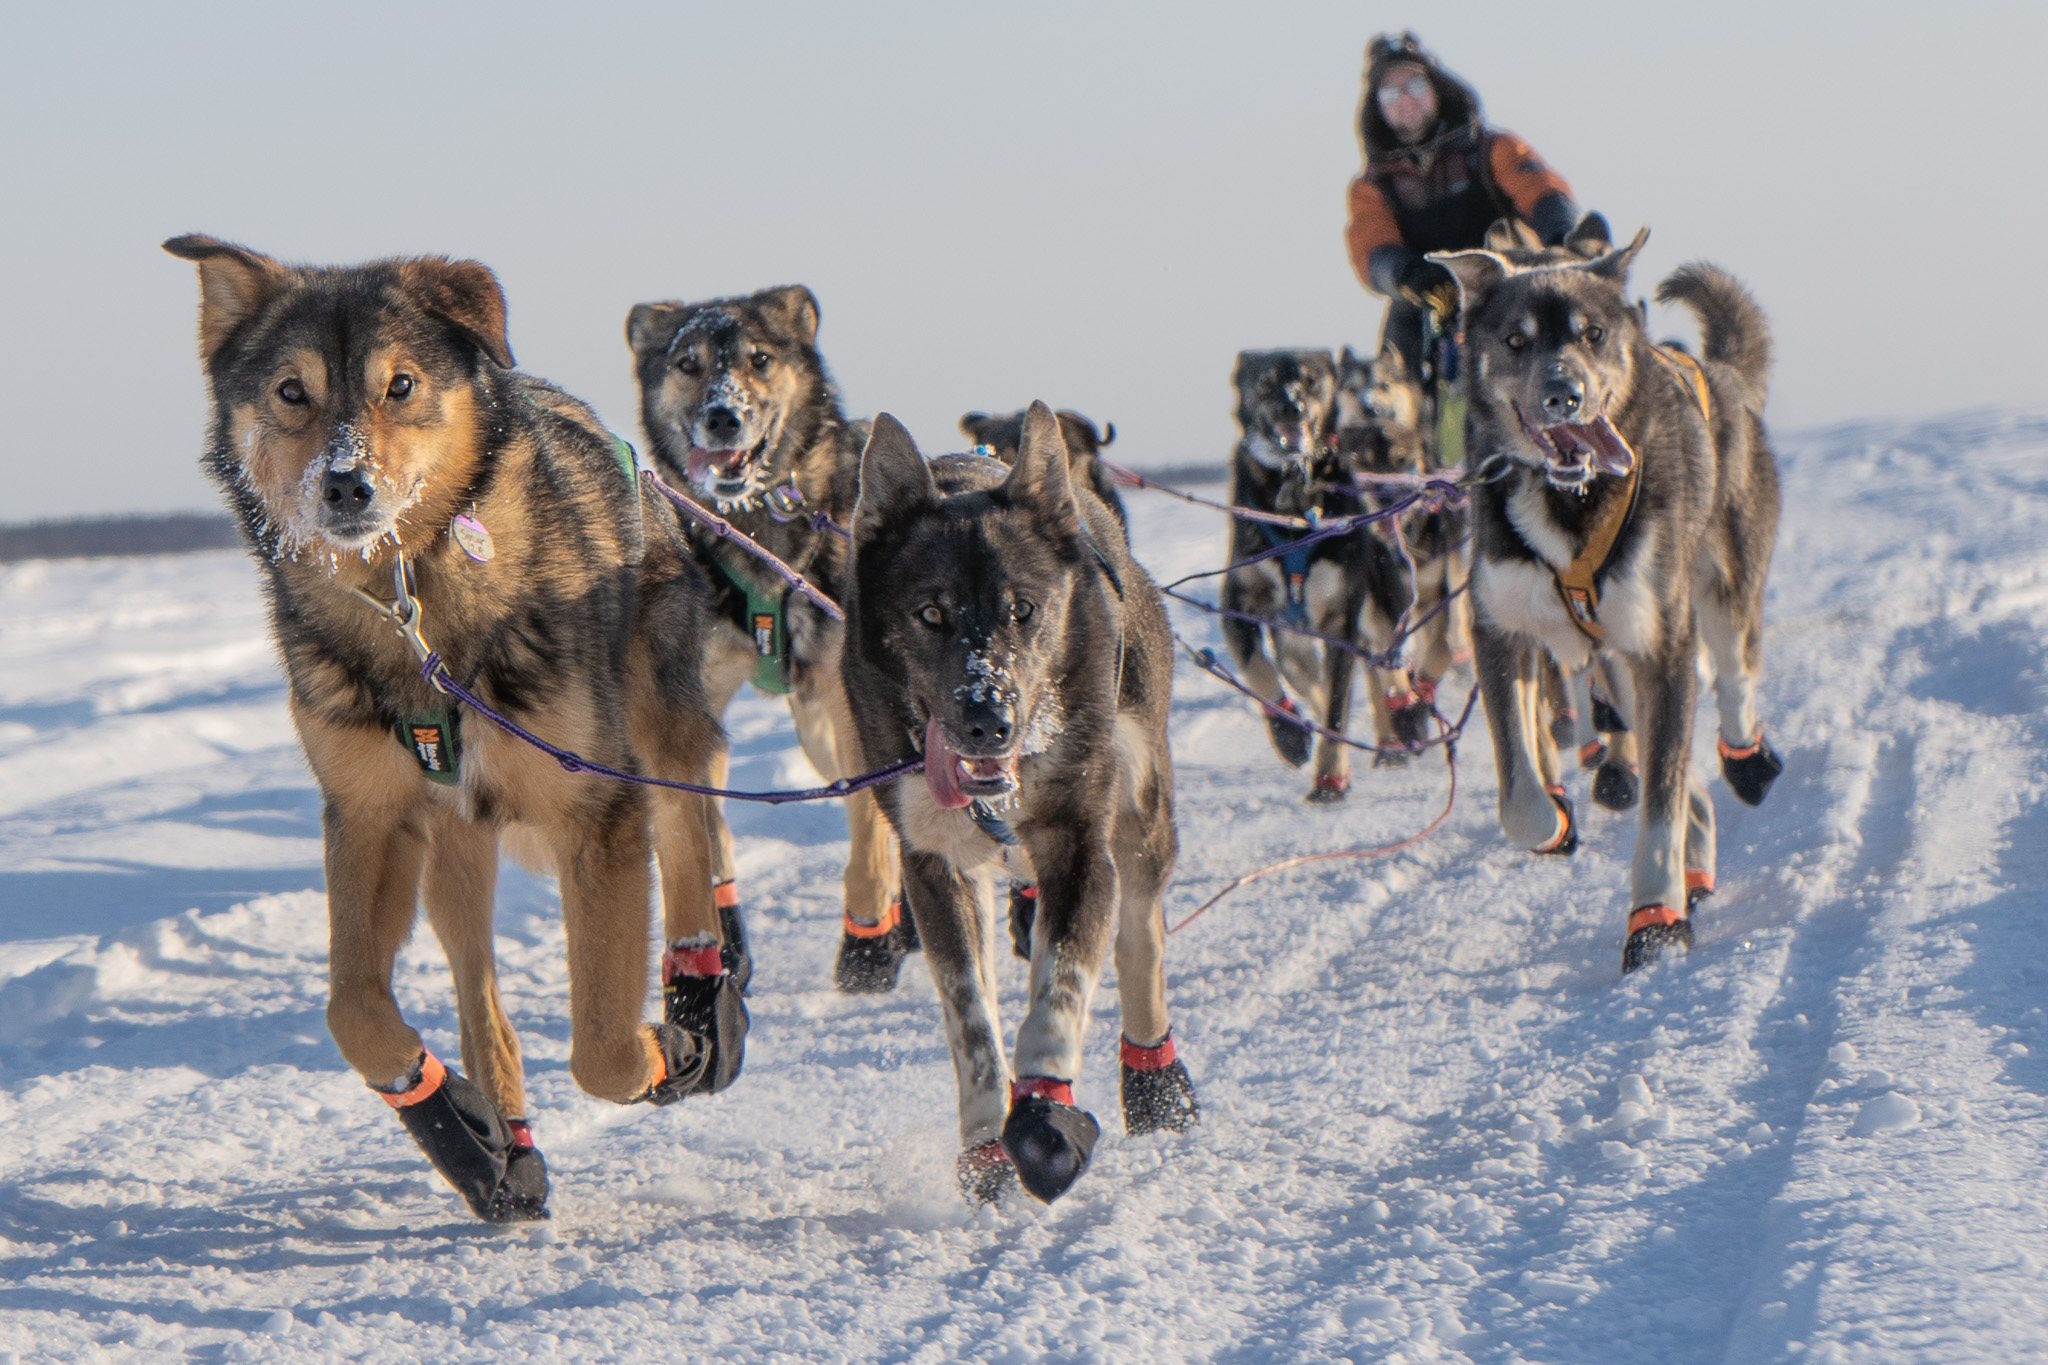 A dog team runs through the snow